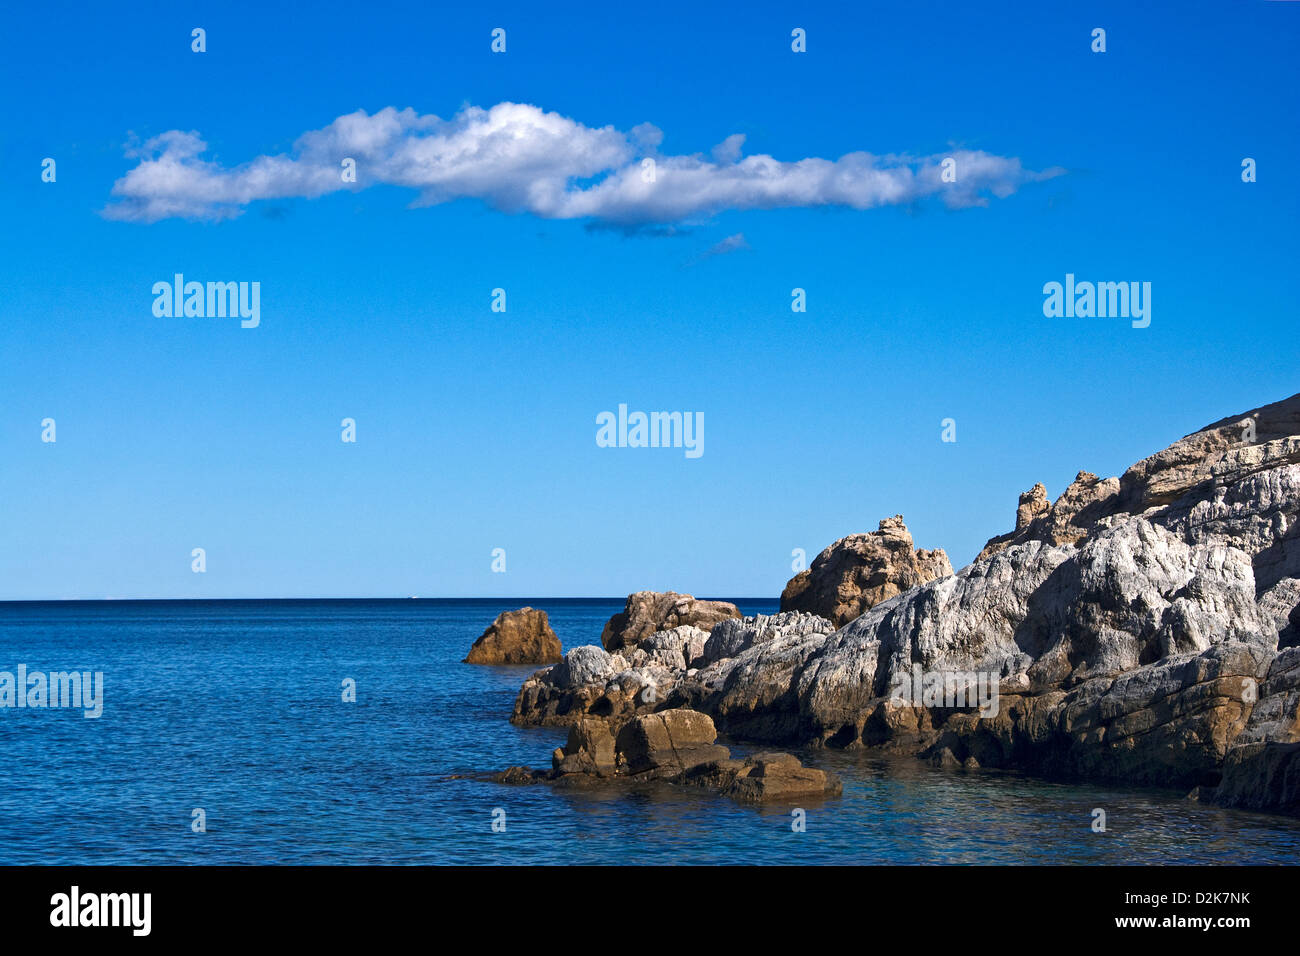 Rocks in the Aegean Sea Stock Photo